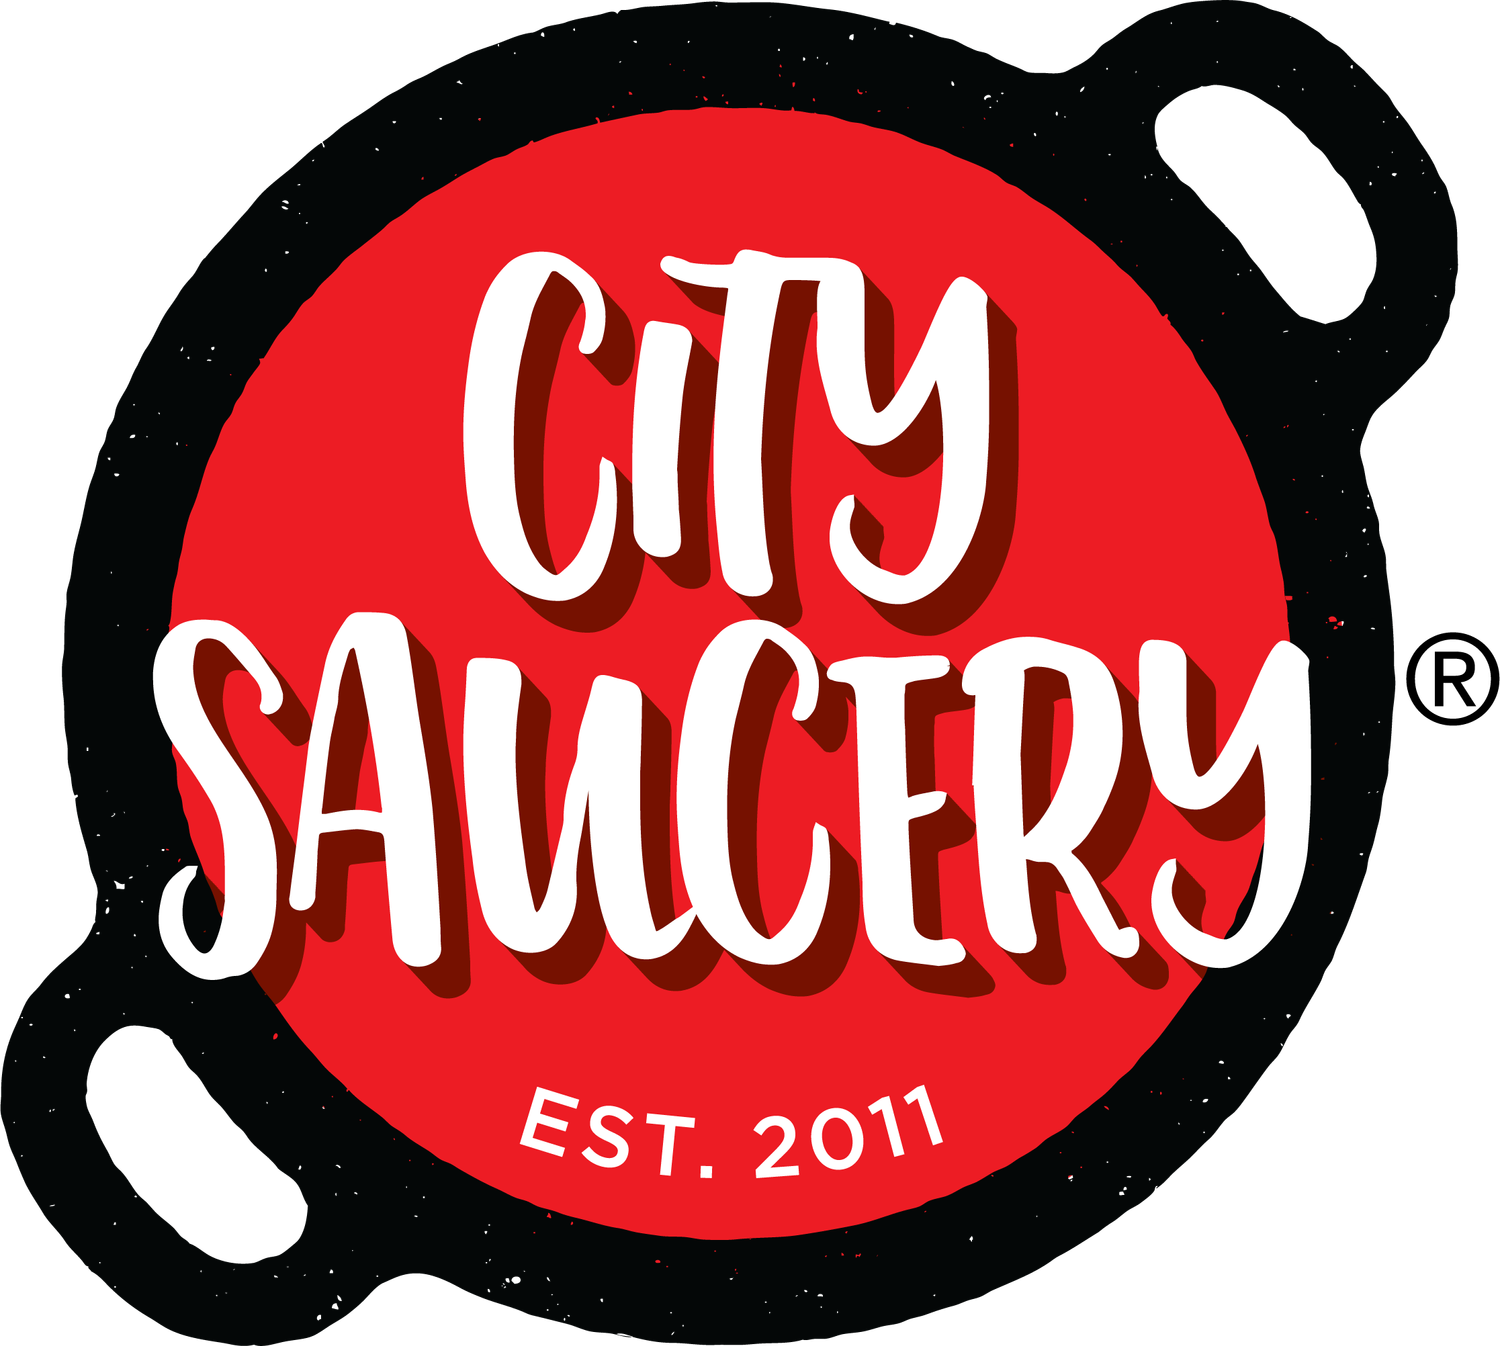 City Saucery